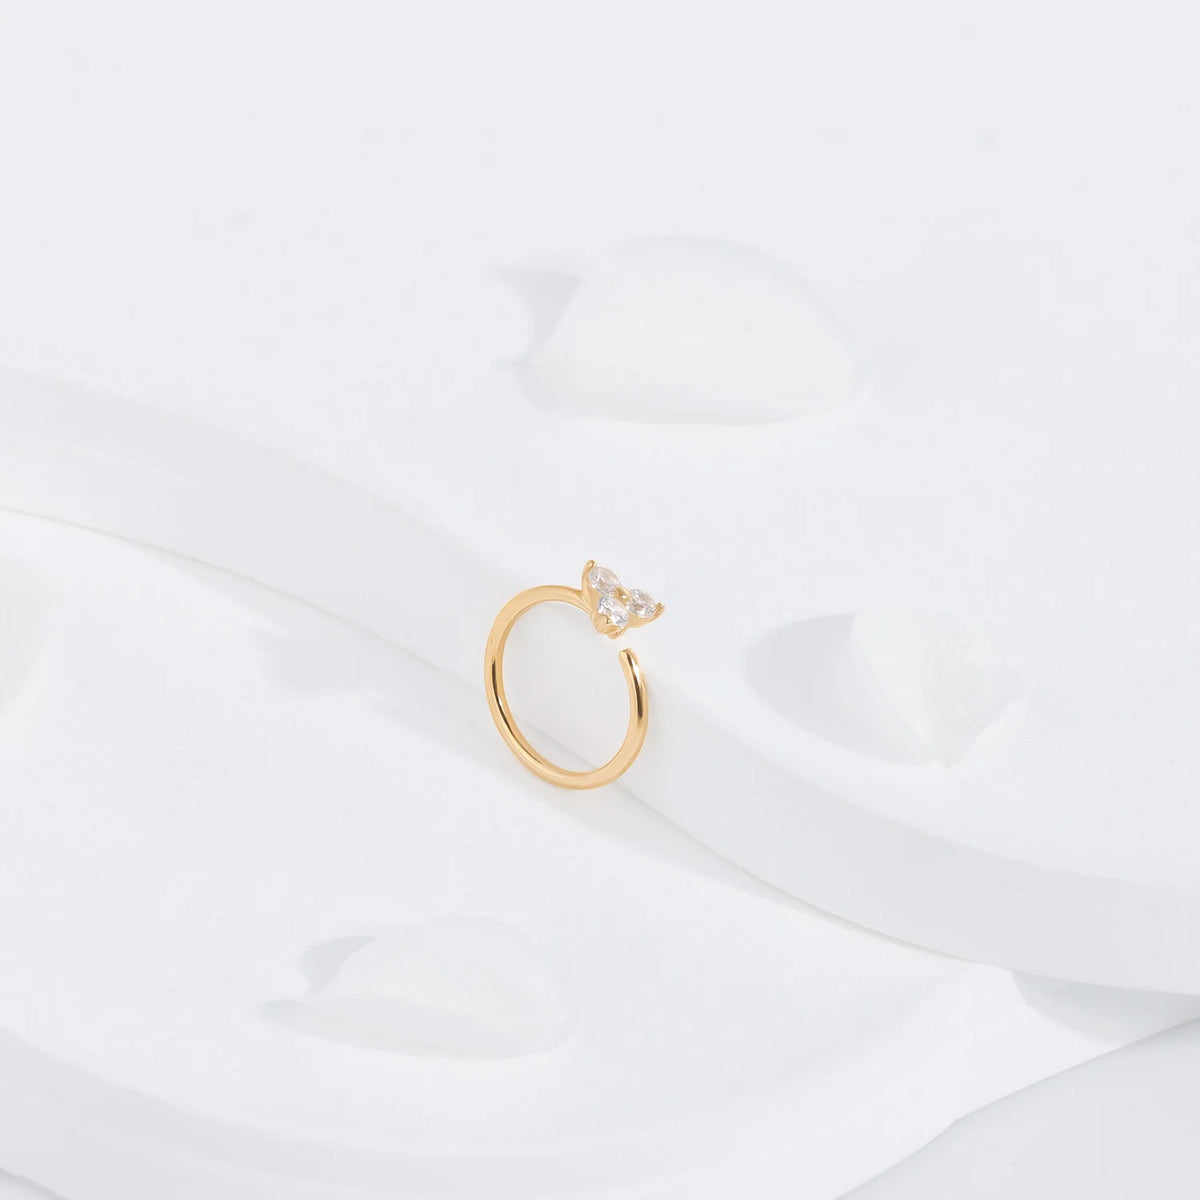 Anillo de nariz de oro de 14 quilates con diamante, 3 puntos, piedras de circonita transparente, anillo sin costuras